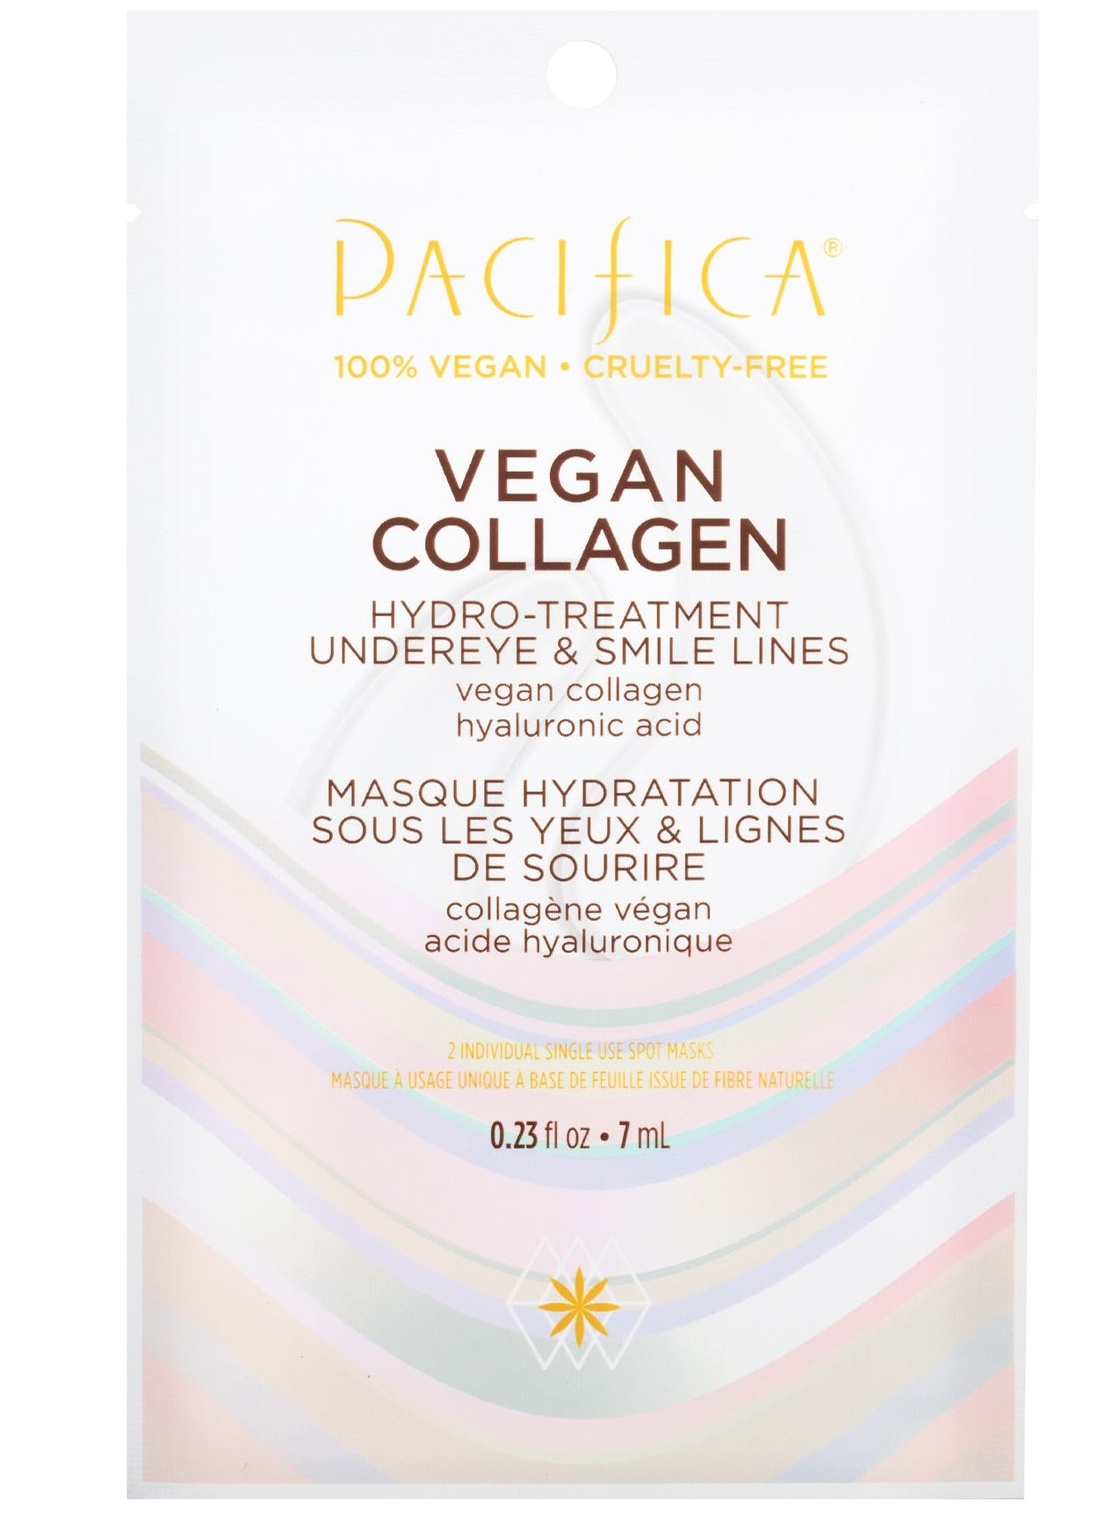 Pacifica Vegan Collagen Hydro-treatment Undereye & Smile Lines